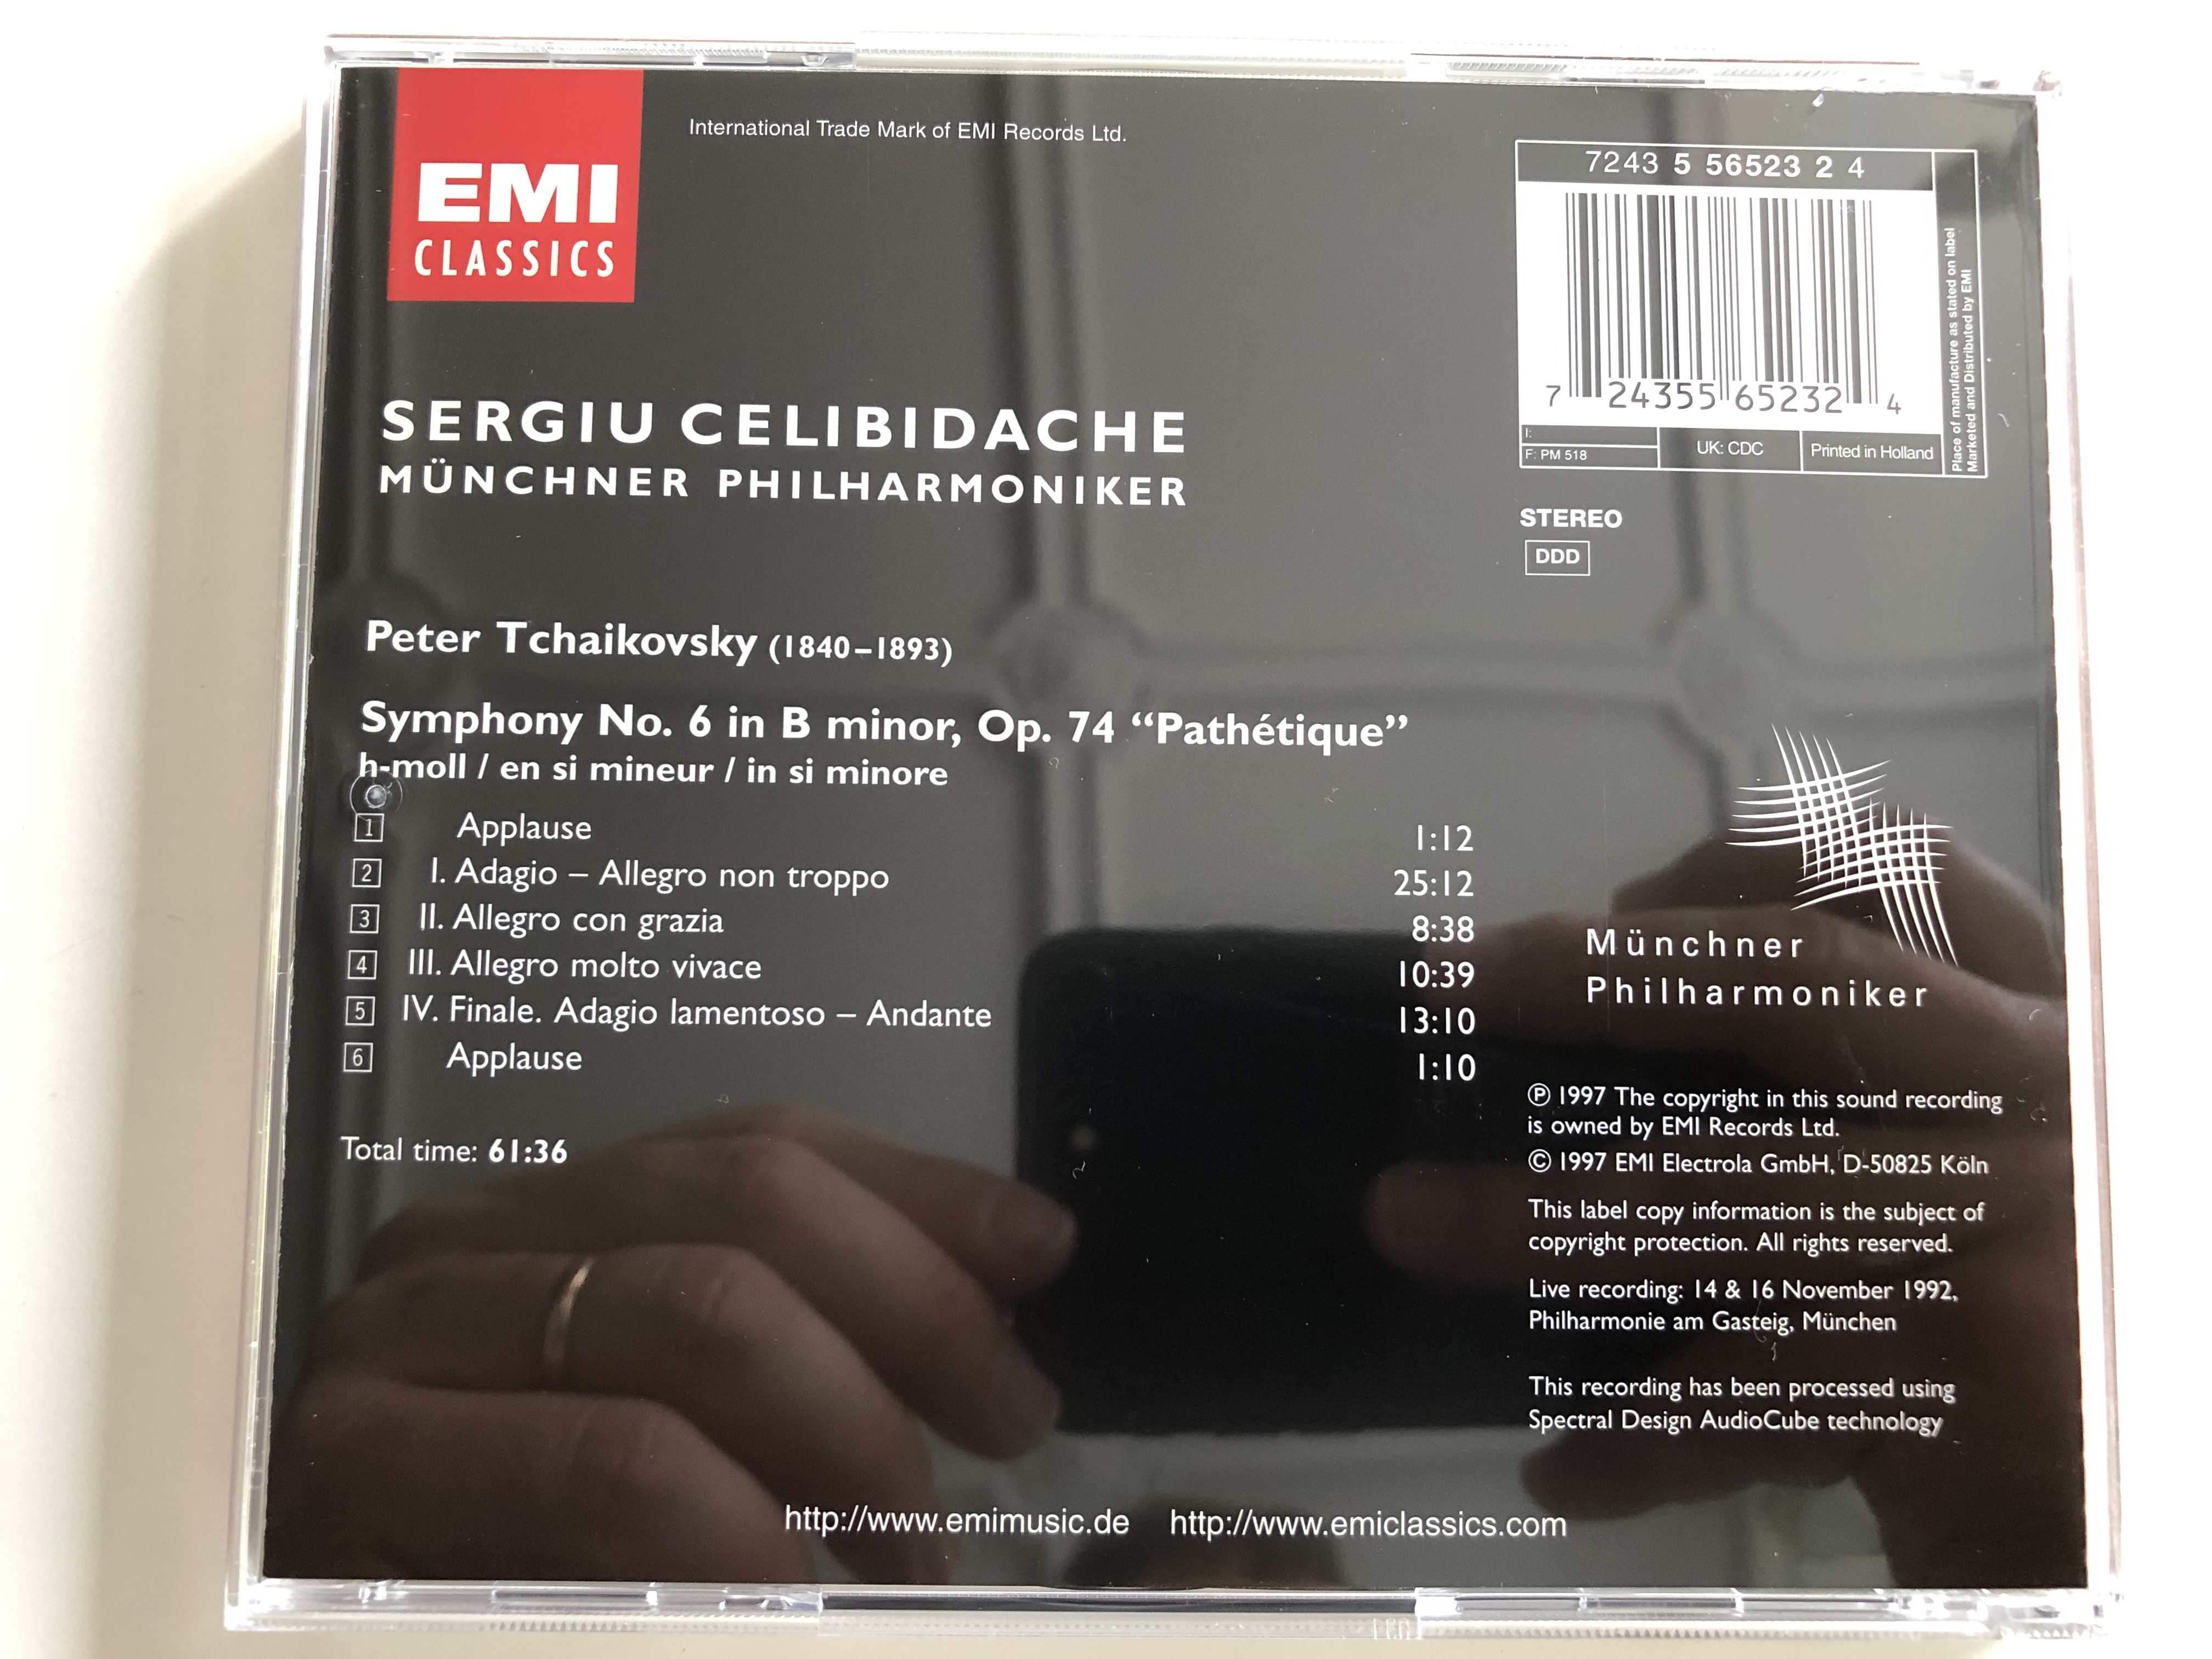 celibidache-m-nchner-philharmoniker-tchaikovsky-emi-classic-first-authorized-edition-audio-cd-1997-9-.jpg